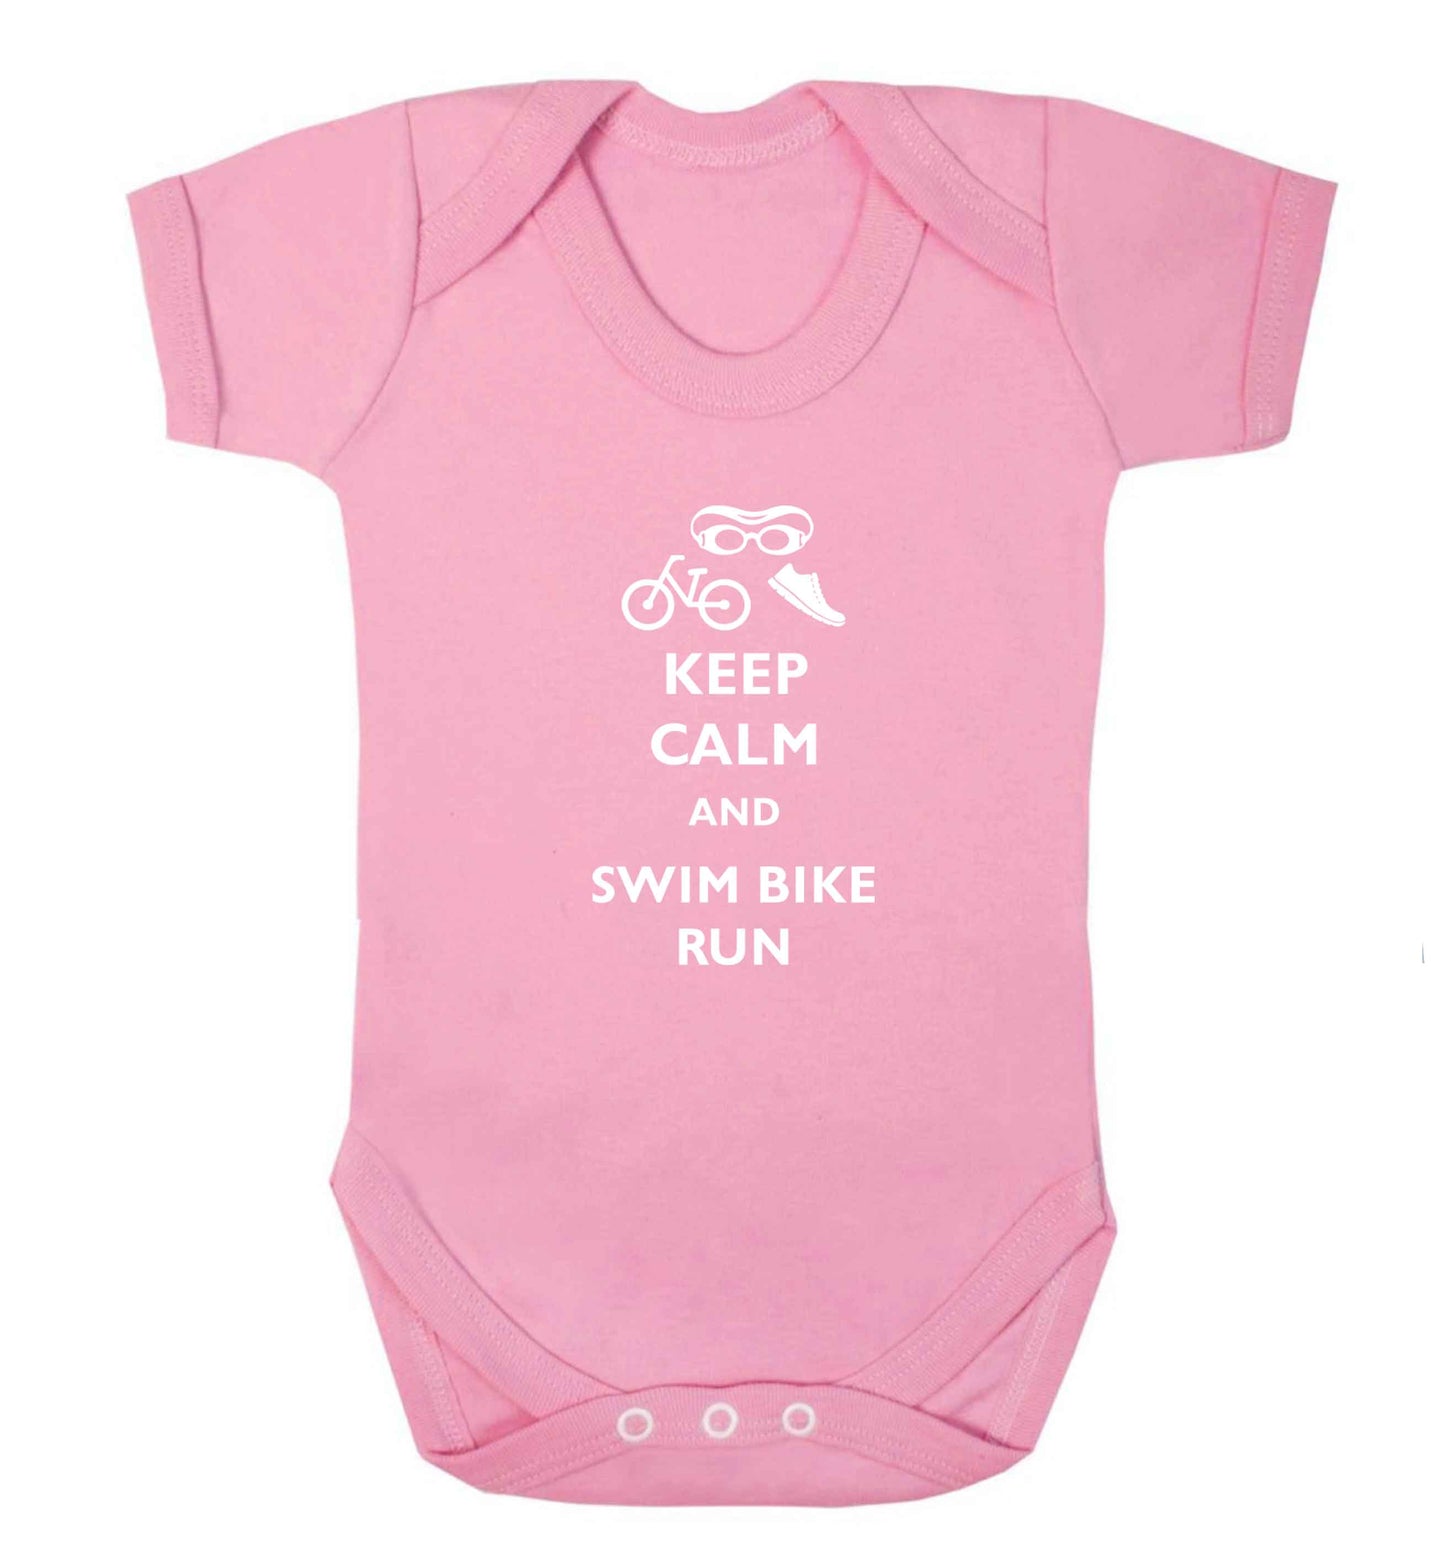 Keep calm and swim bike run baby vest pale pink 18-24 months